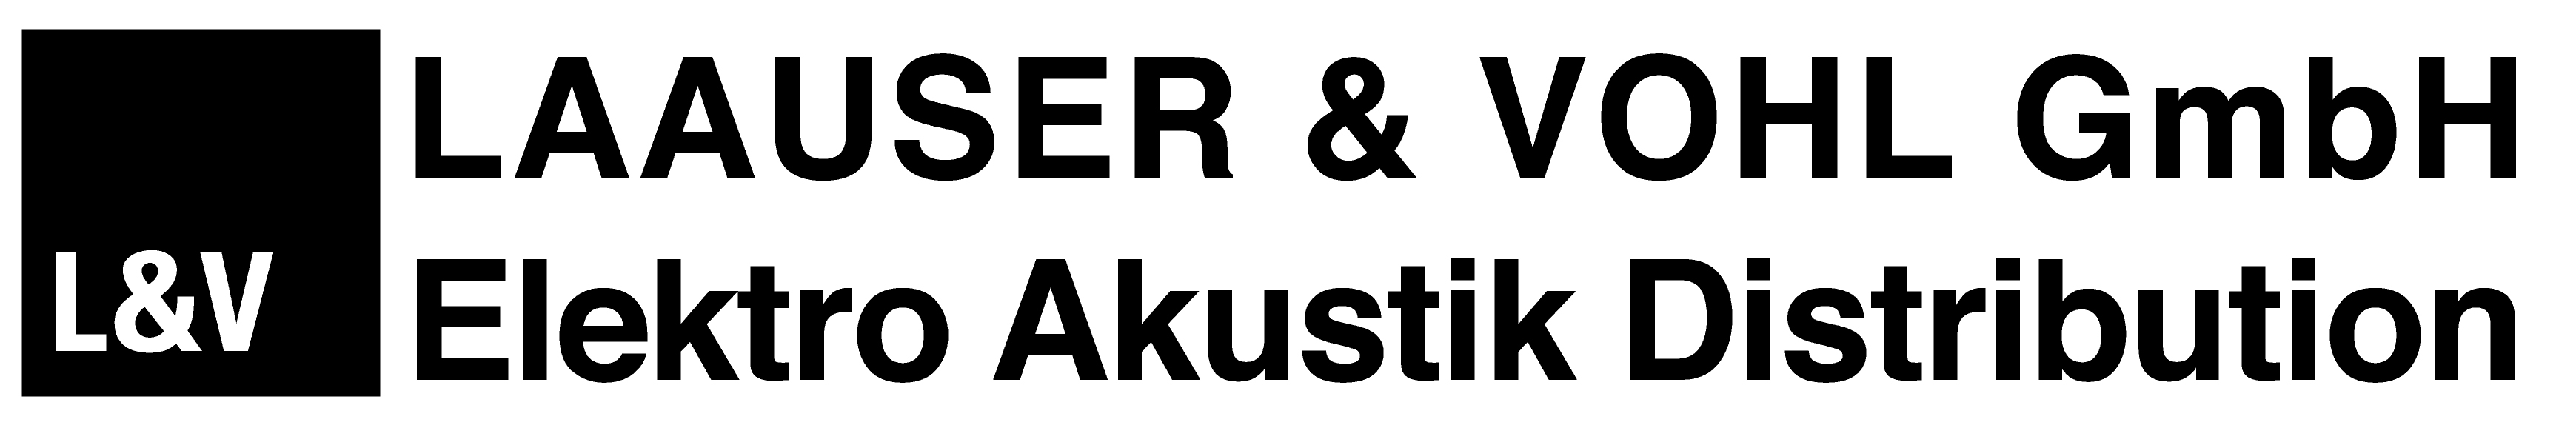 Laauser & Vohl GmbH Logo